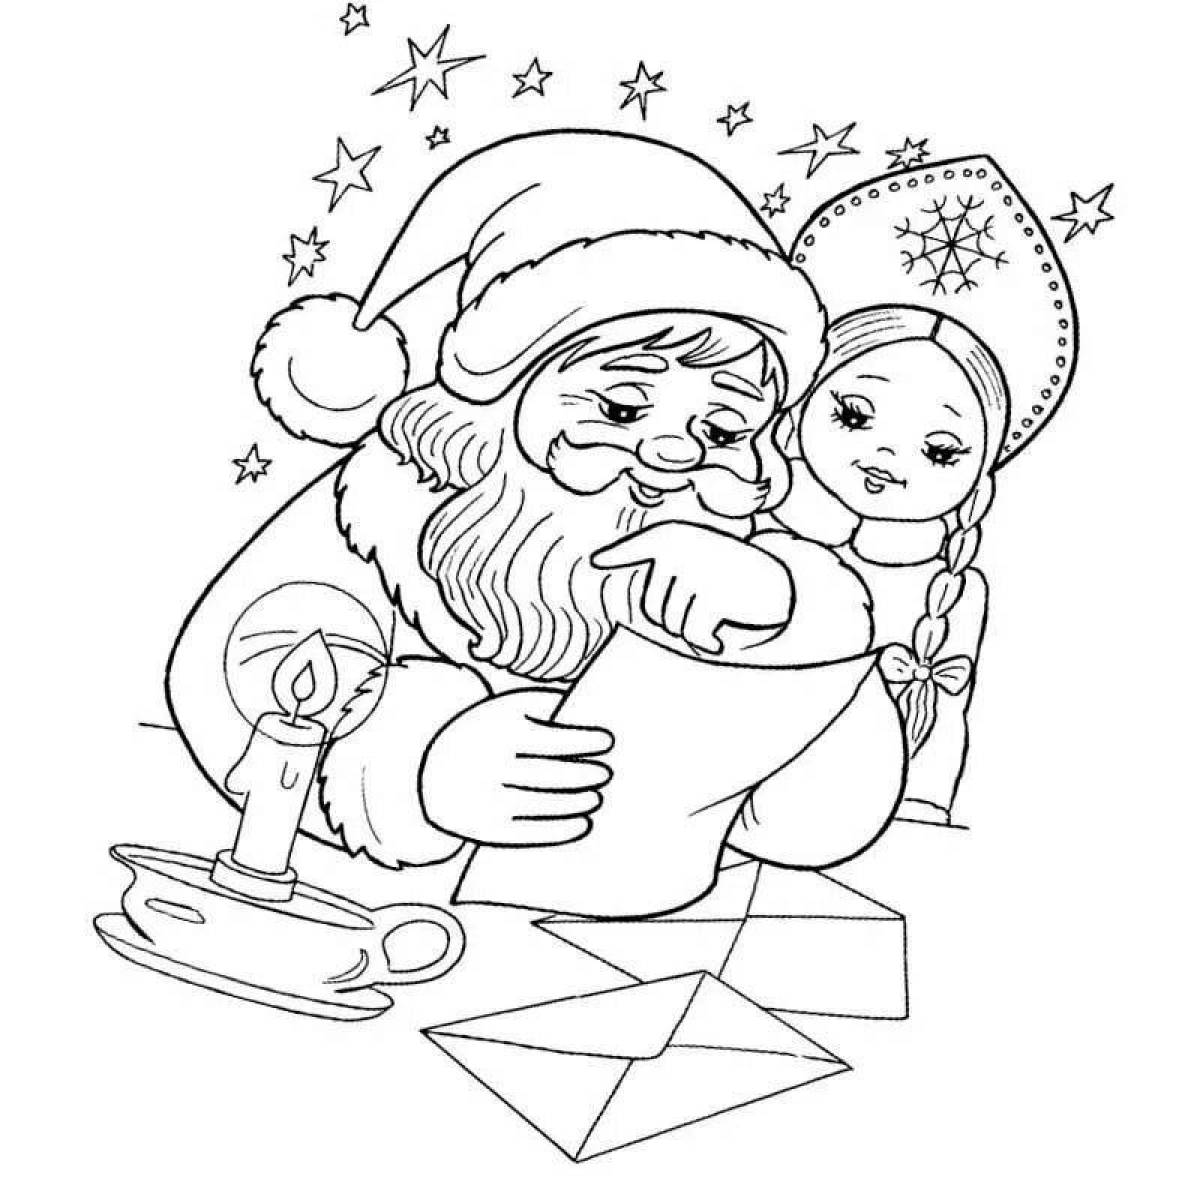 Coloring page twinkling santa claus